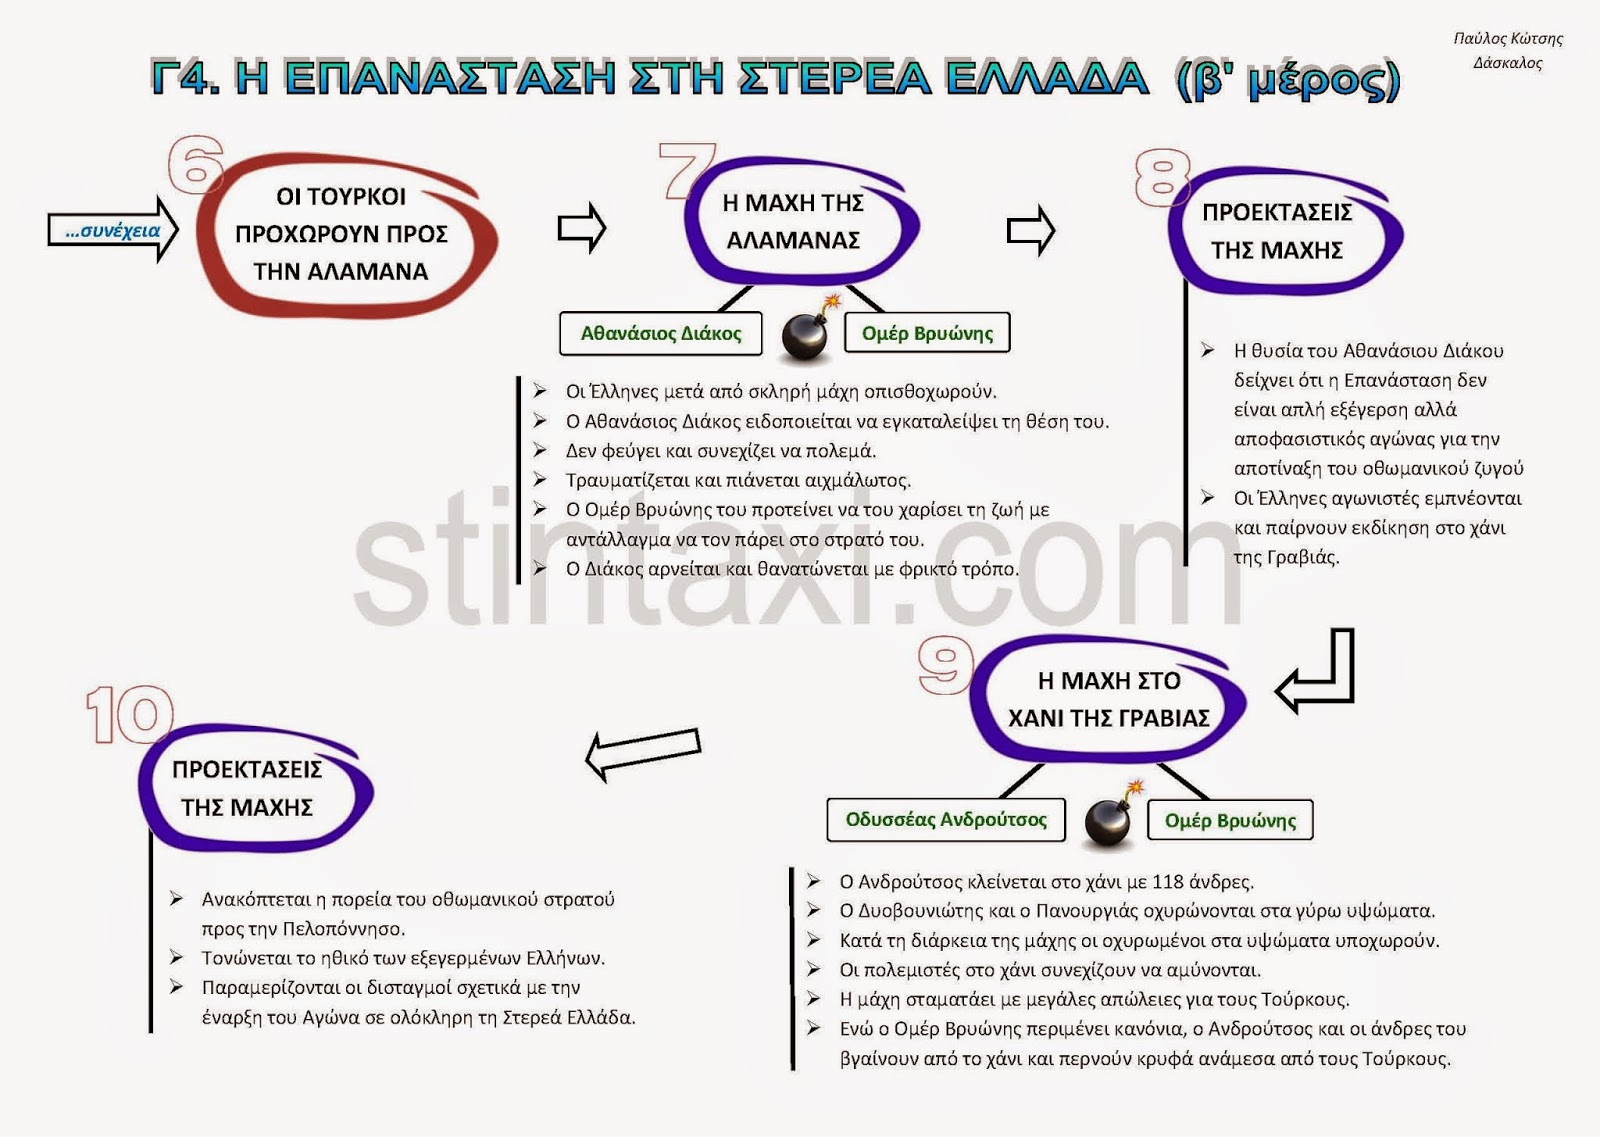 http://www.stintaxi.com/uploads/1/3/1/0/13100858/c4b-epanast-sterea-v2.1.pdf